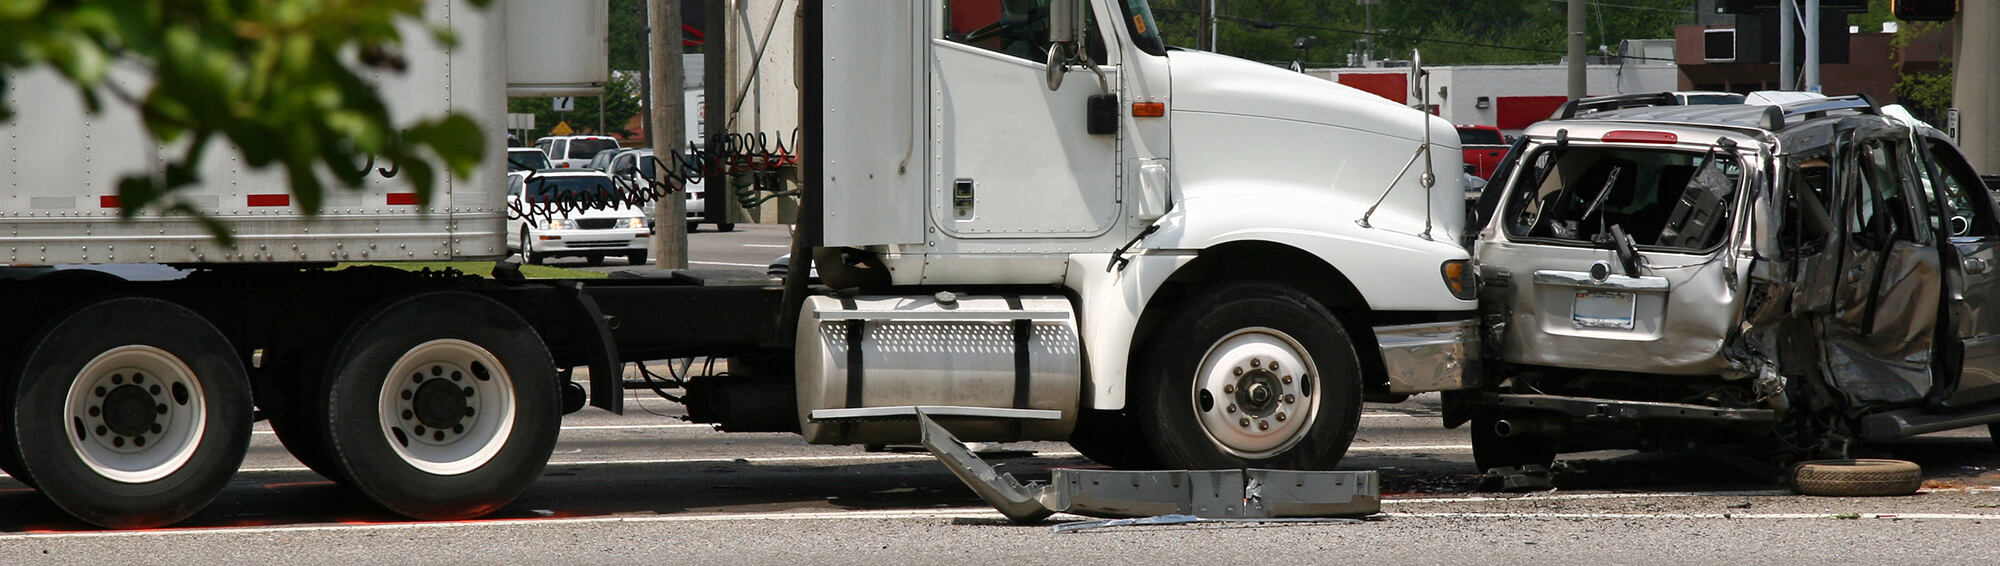 Truck Accident 1 - Blog Banner